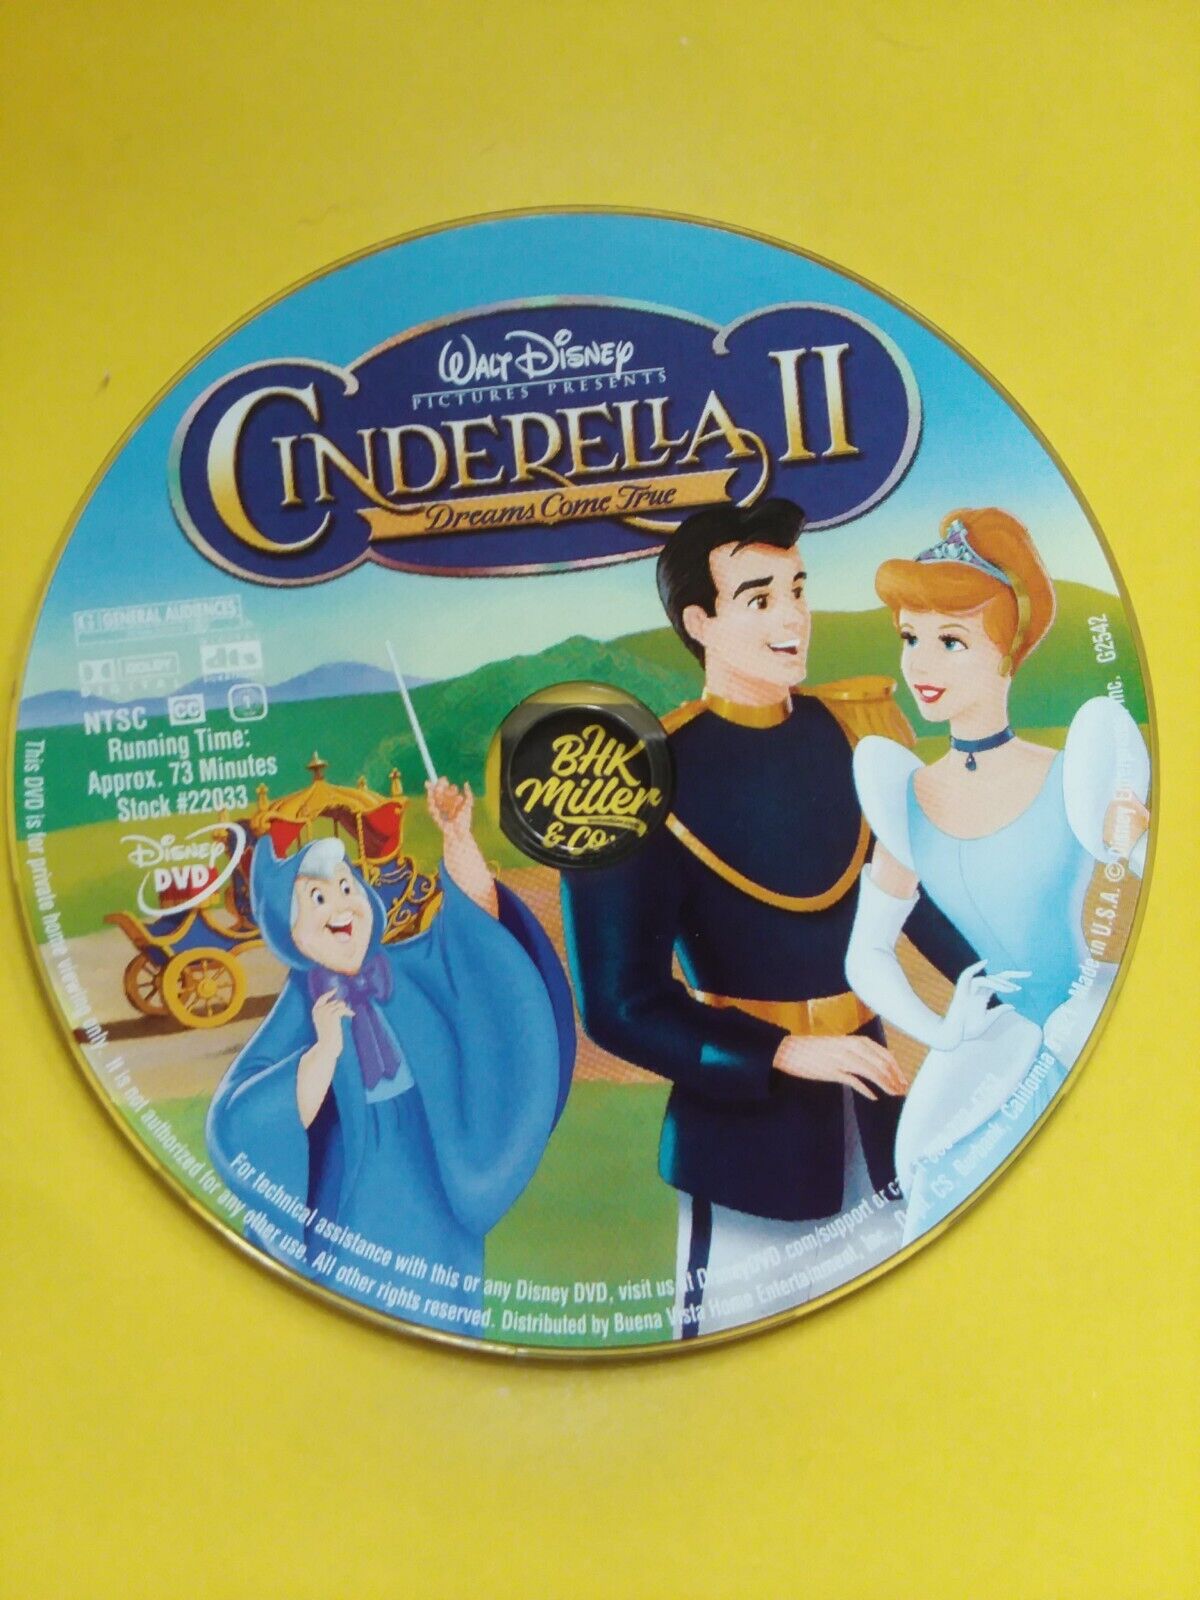 Cinderella II - Dreams Come True  DVD - DISC SHOWN ONLY